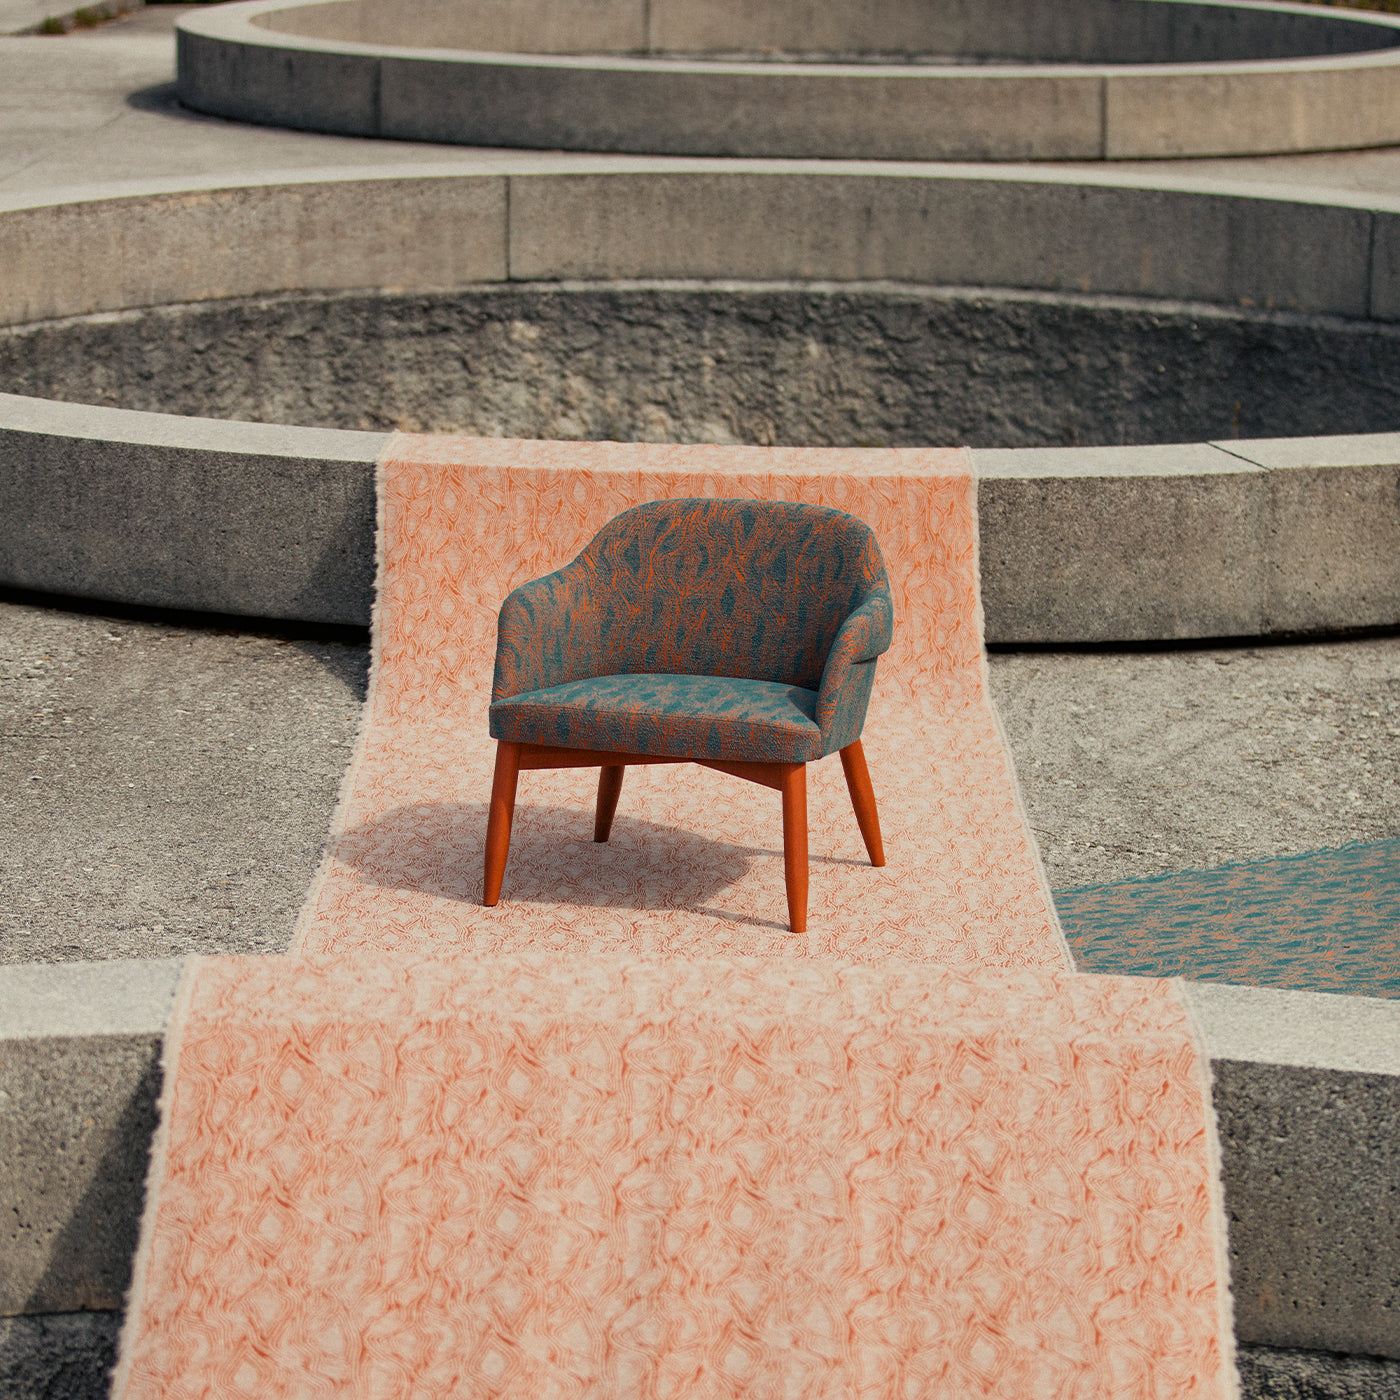 Spy 651 Orange and Teal Armchair by Emilio Nanni - Alternative view 1